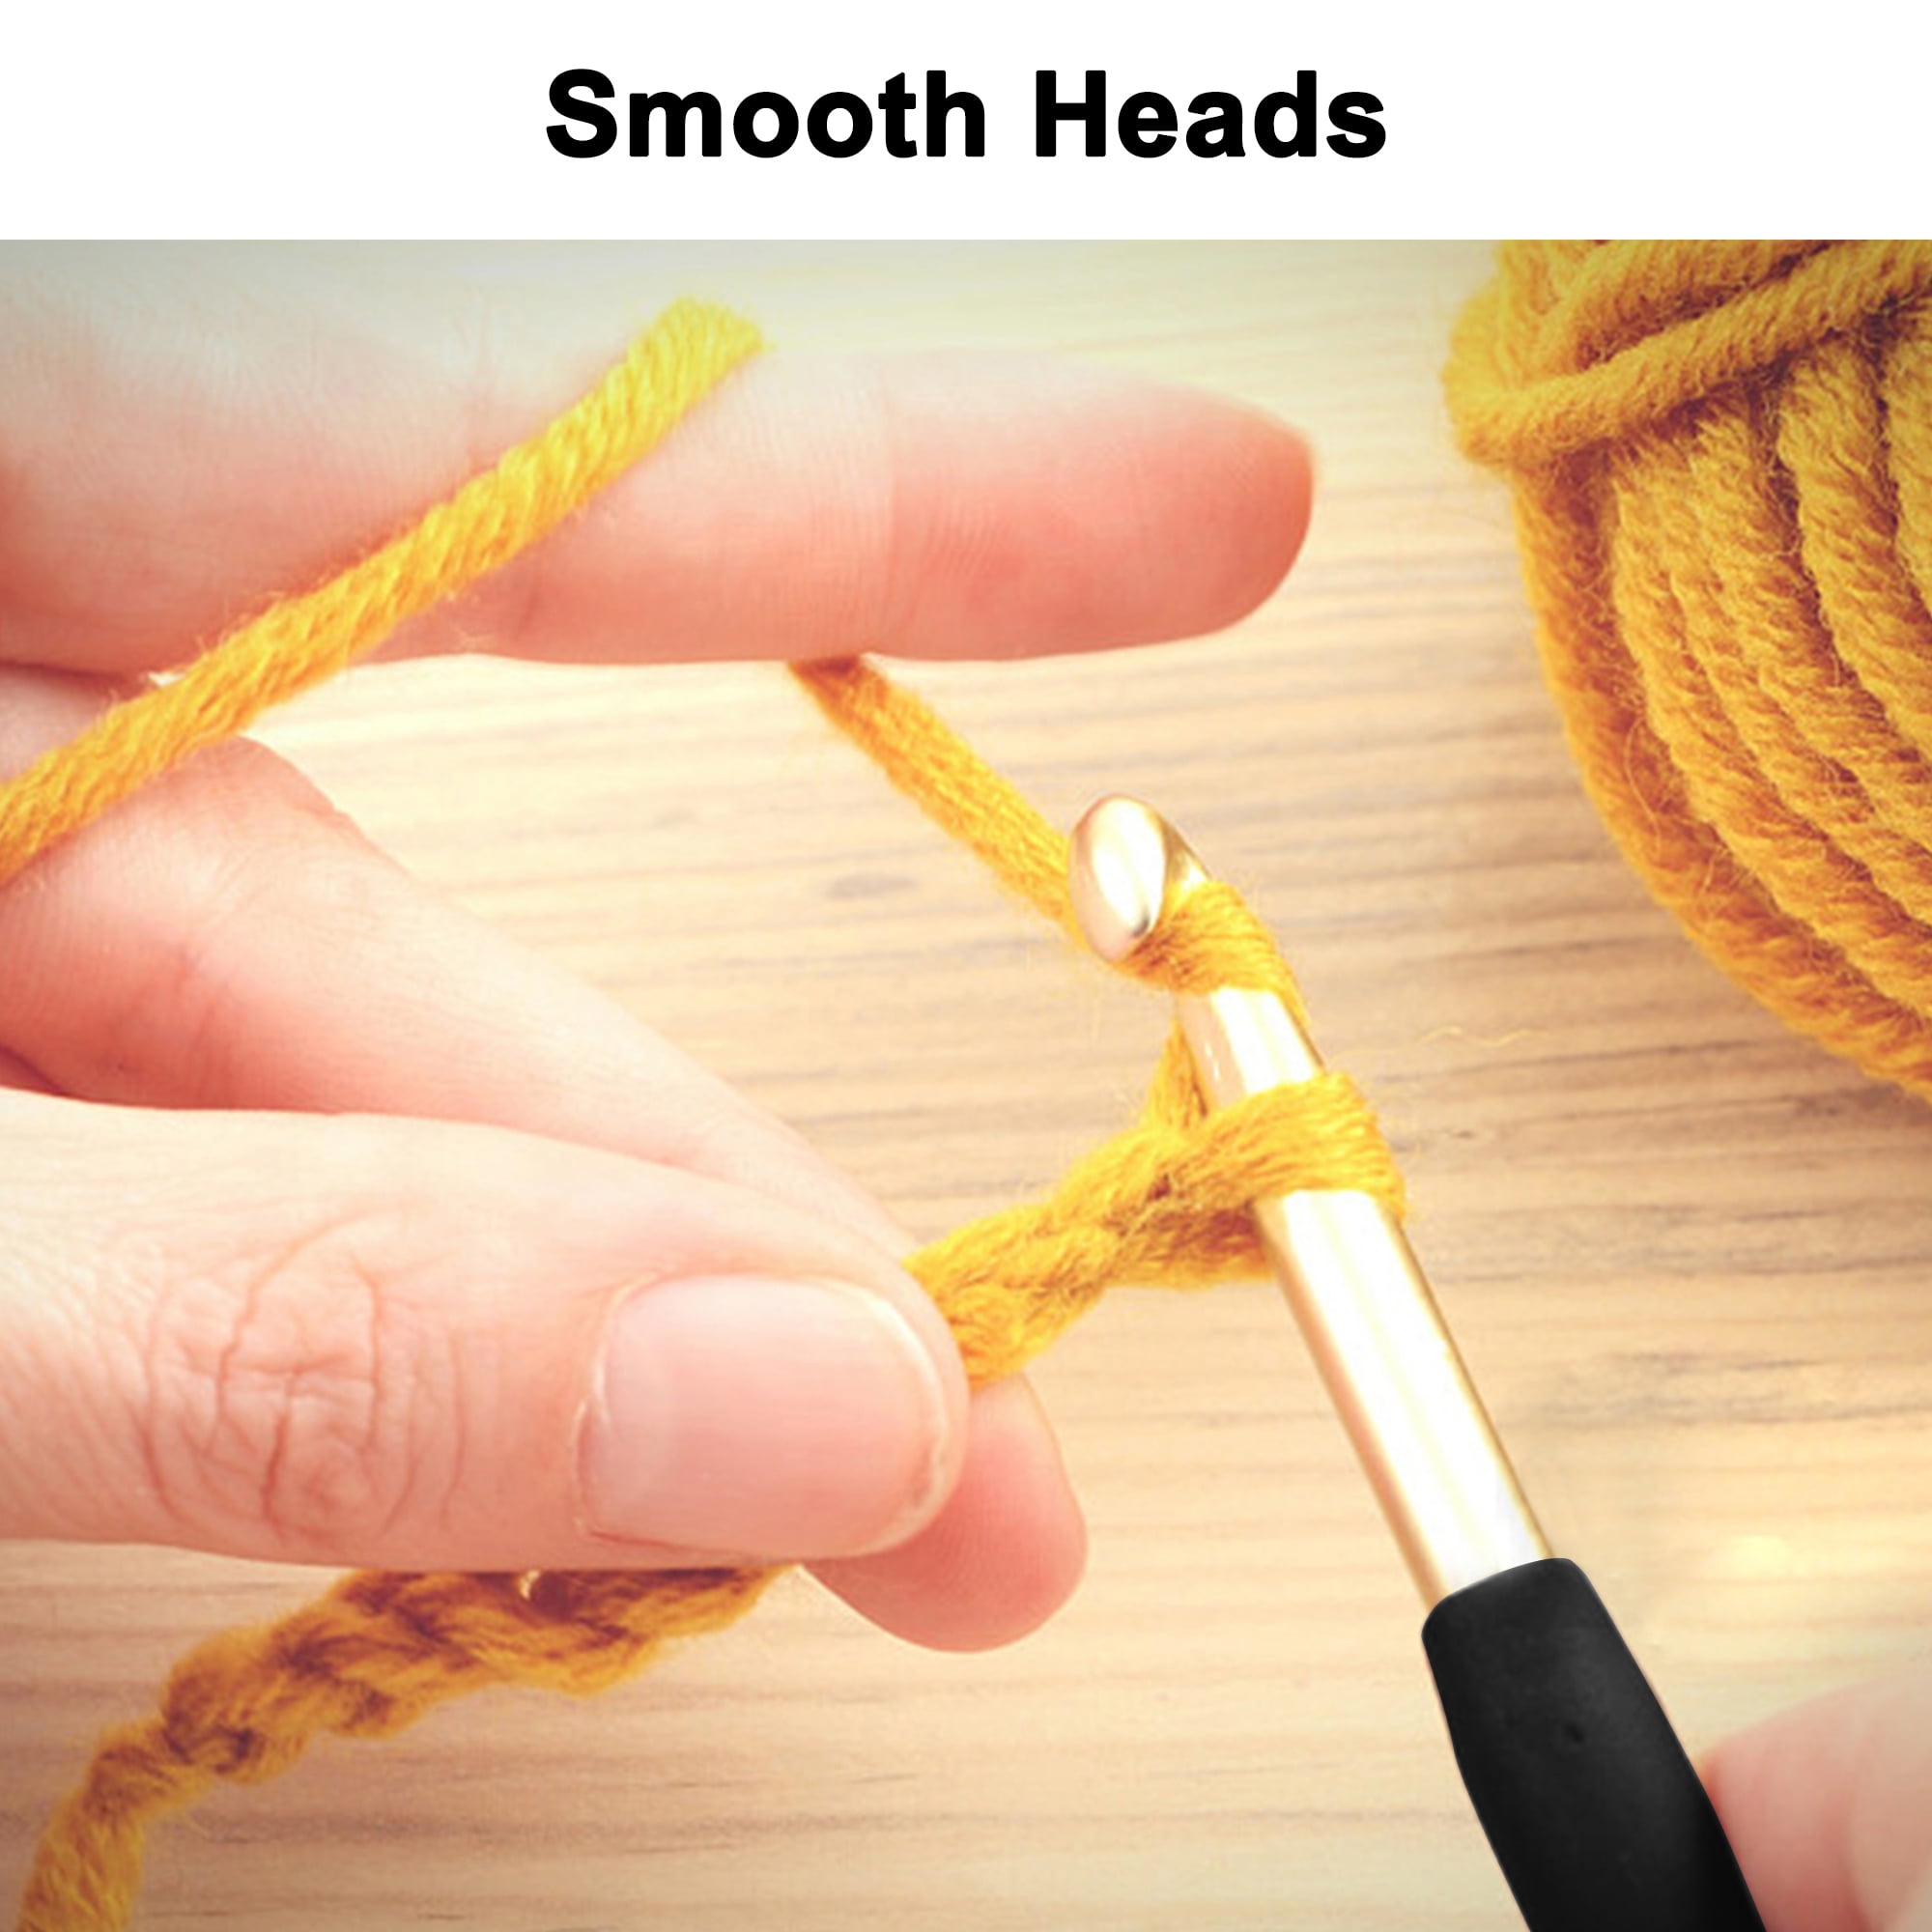 3mm Beginners Crochet Hook, Ergonomic Handle Crochet Hooks for Arthritic  Hands, Comfortable Smooth Knitting Needles for Handmade DIY, Random Color